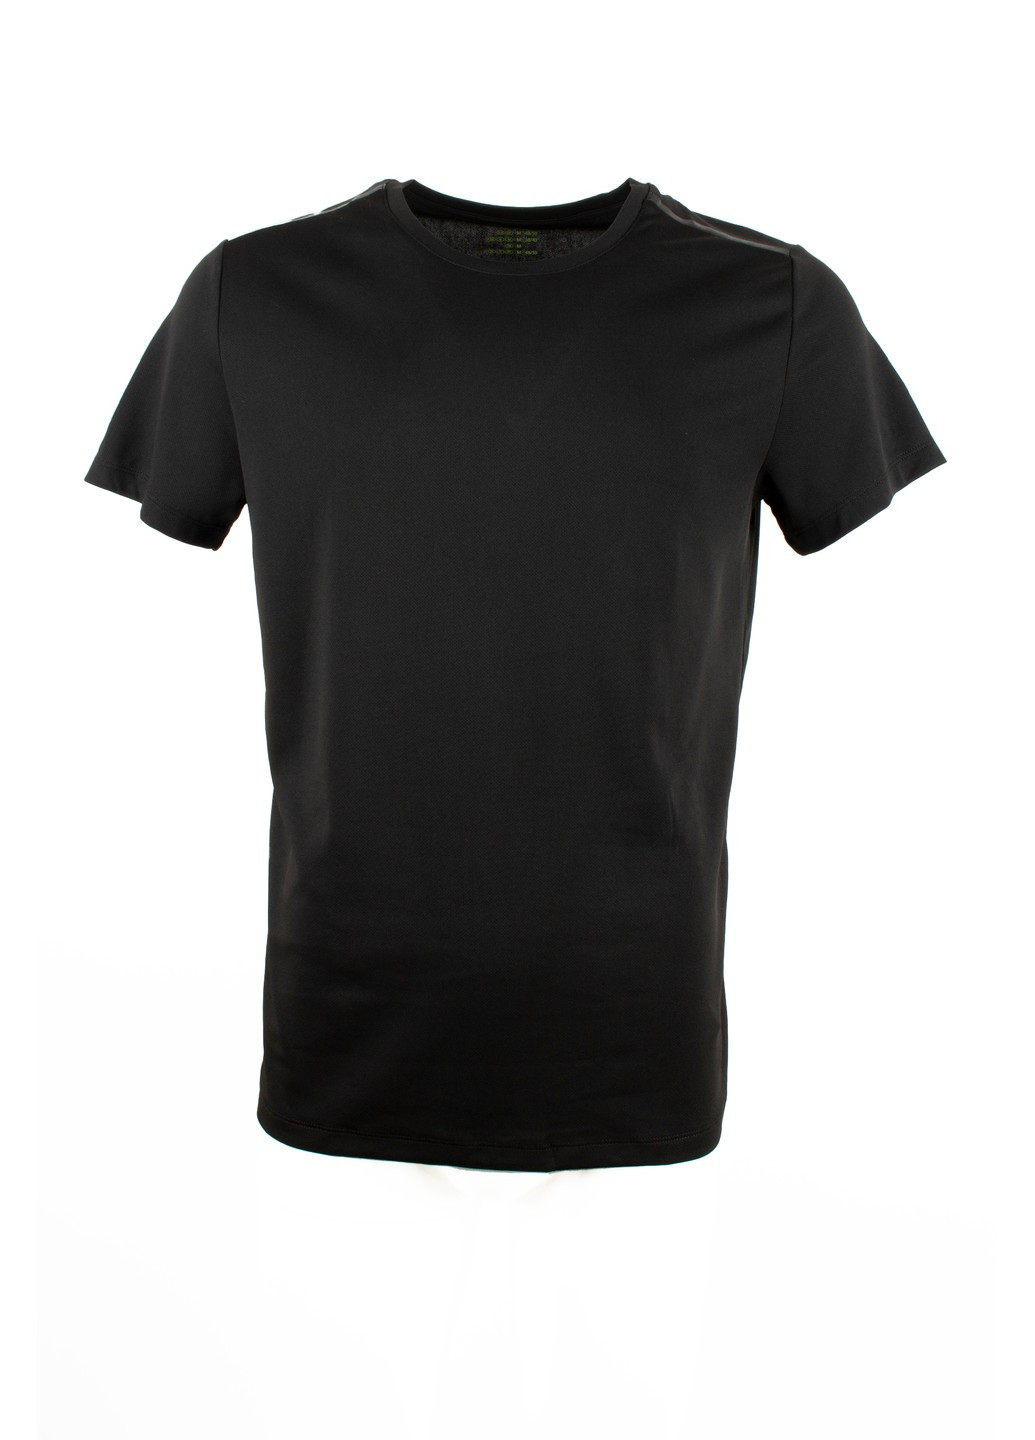 Черная футболка мужская черная ian 315746 Crivit